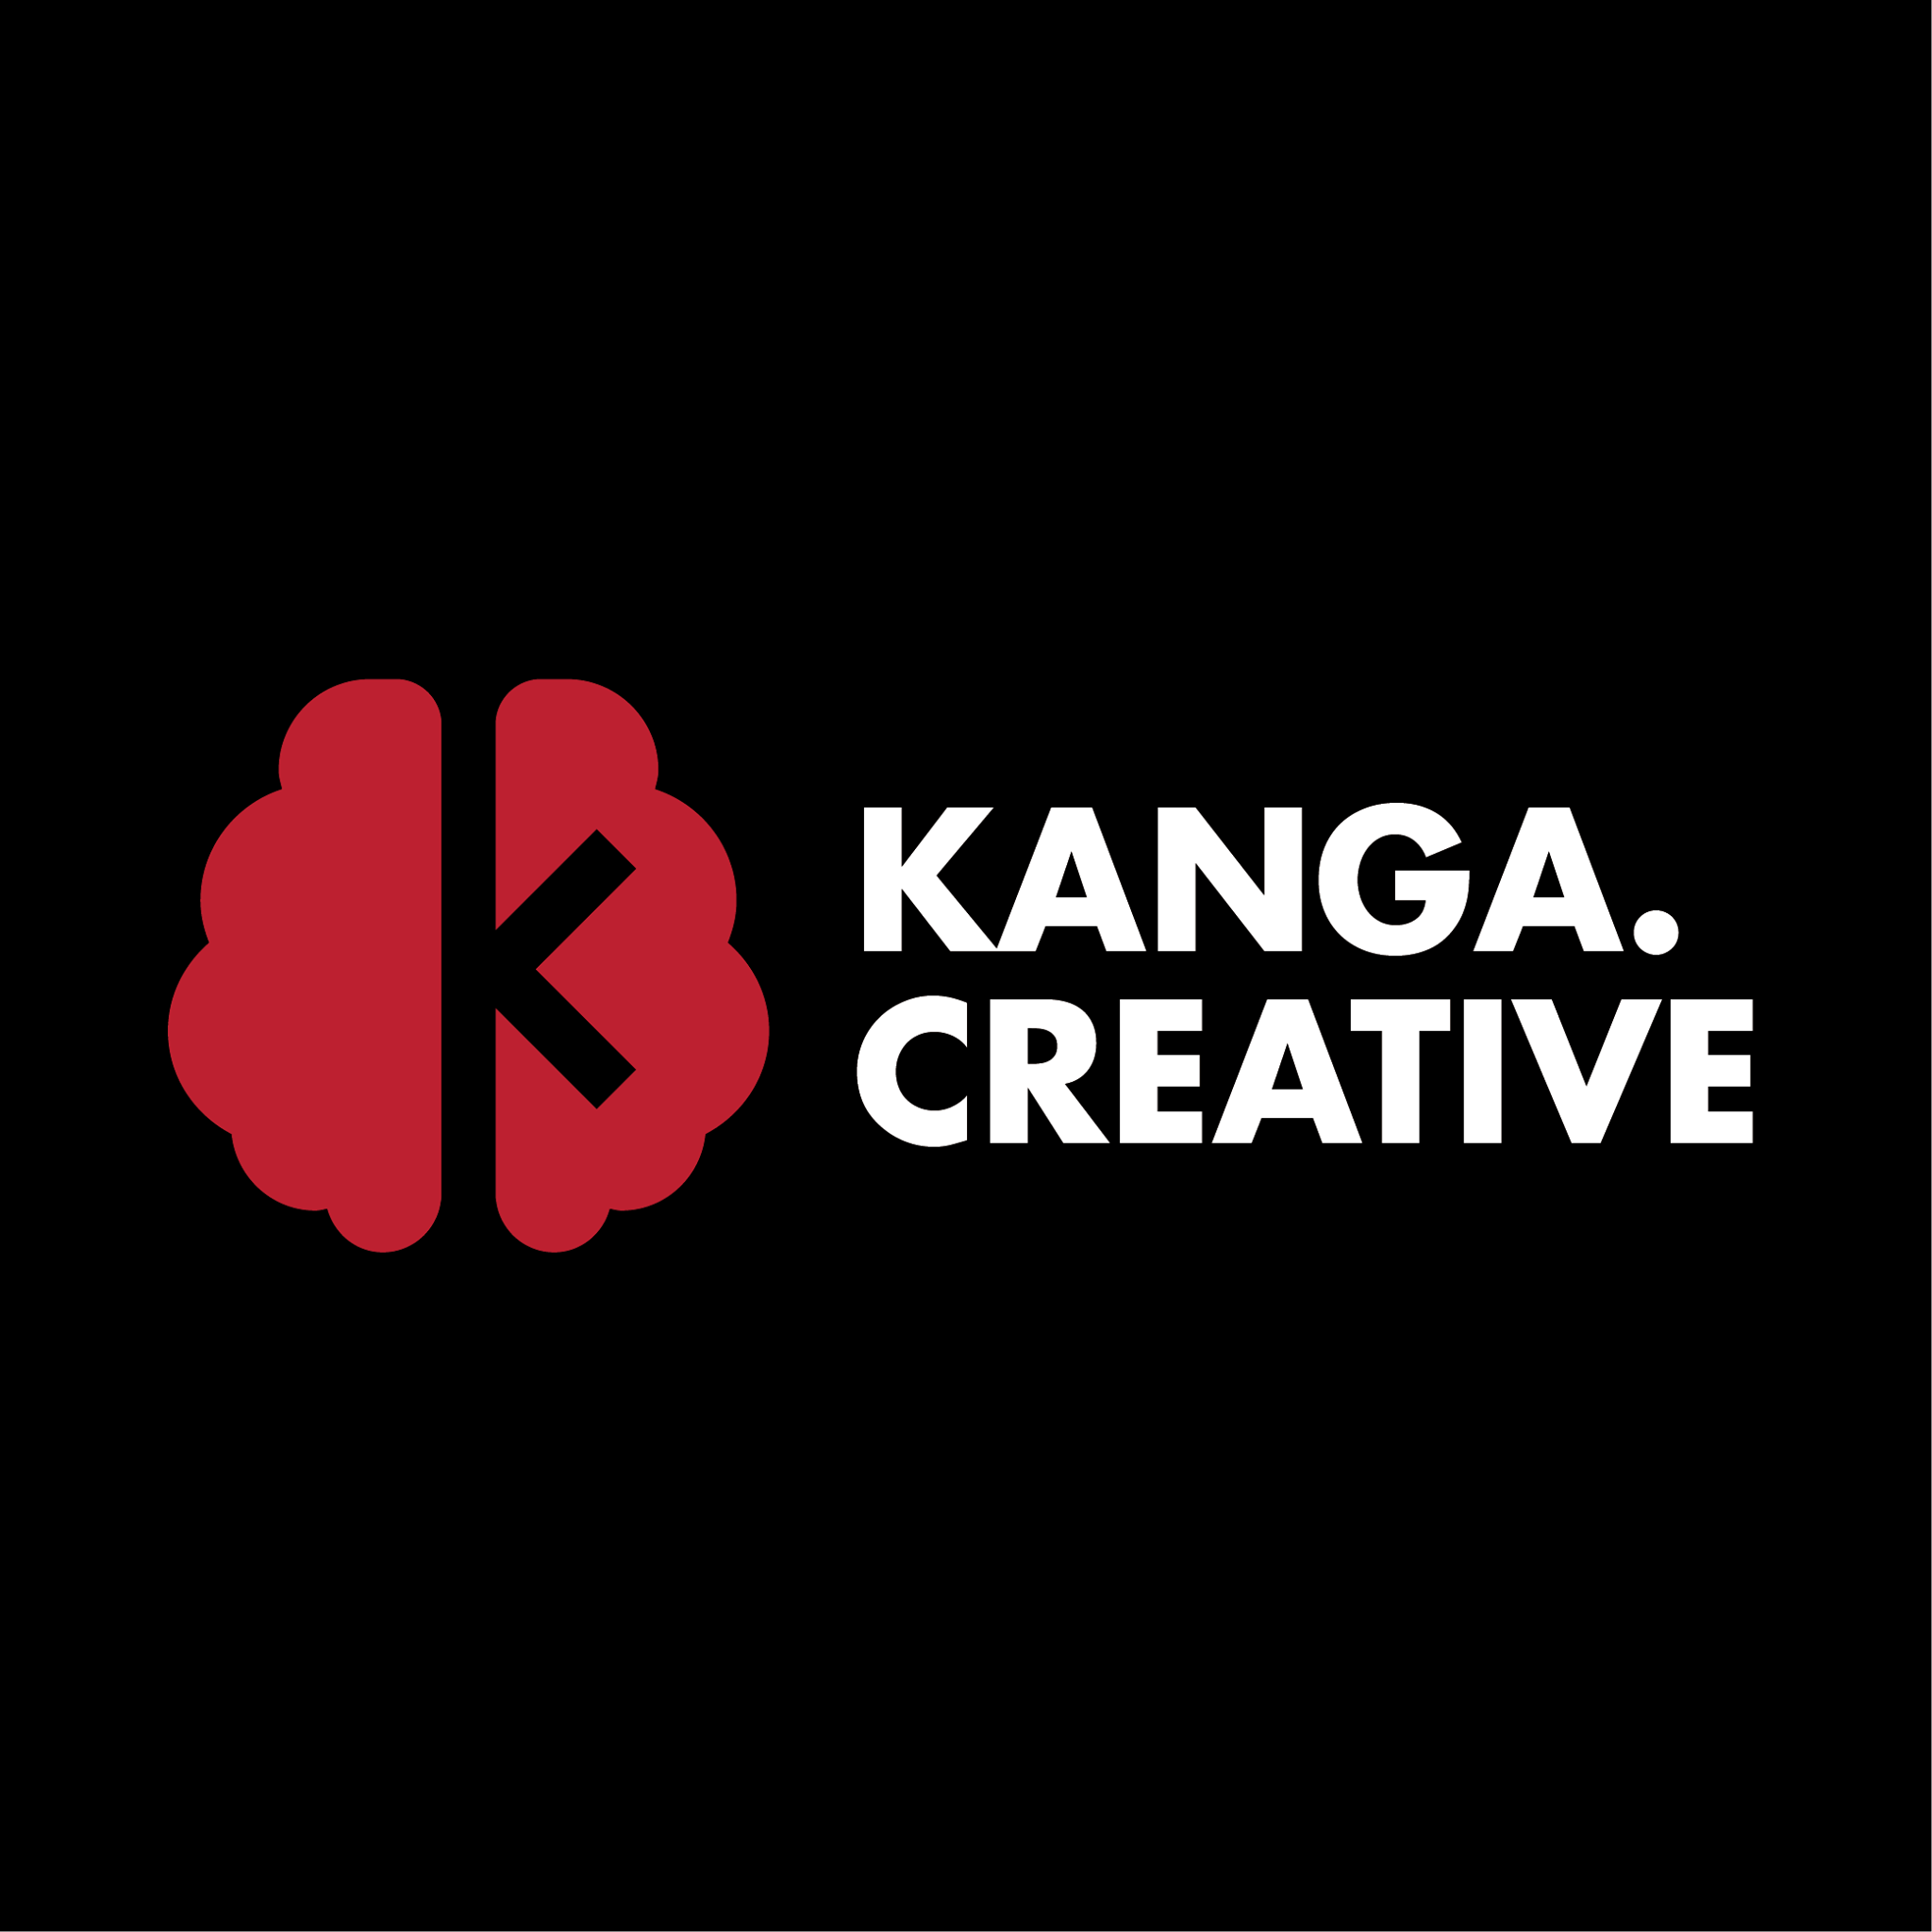 Kanga Creative profile on Qualified.One